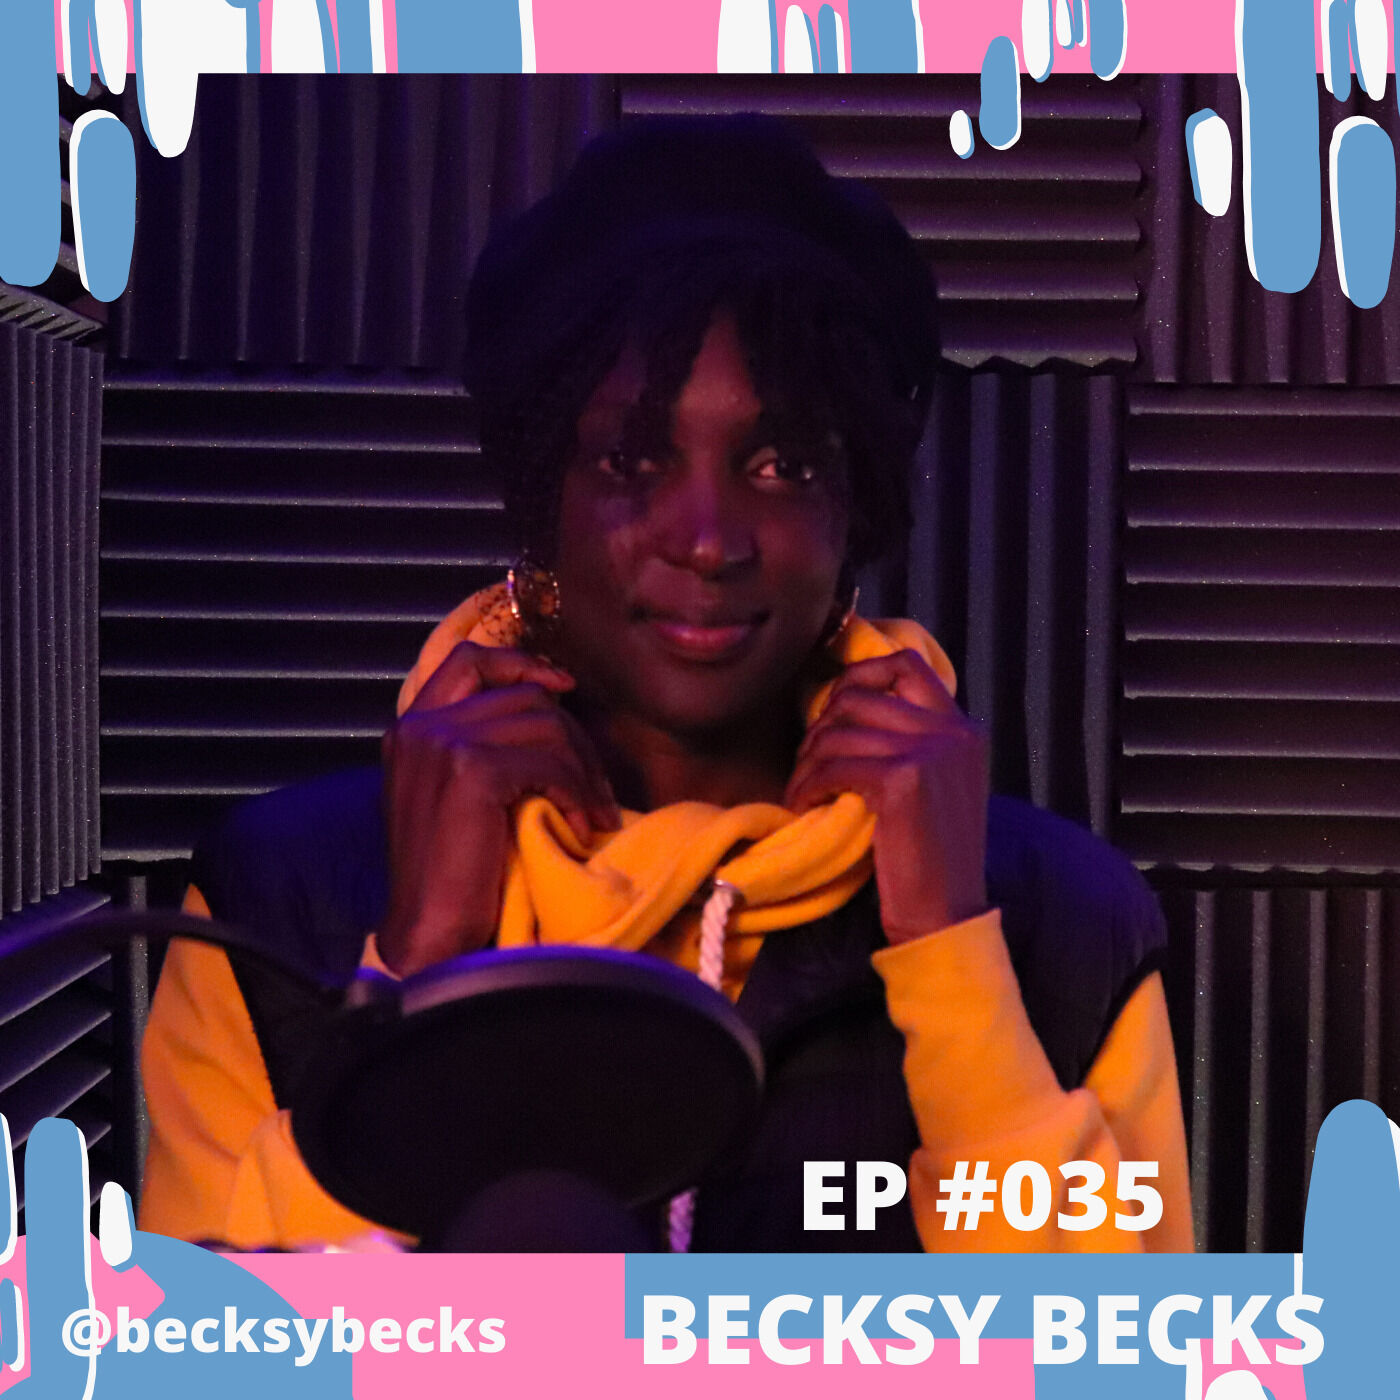 Becksy Becks: Hindsight, Anxiety and Balance